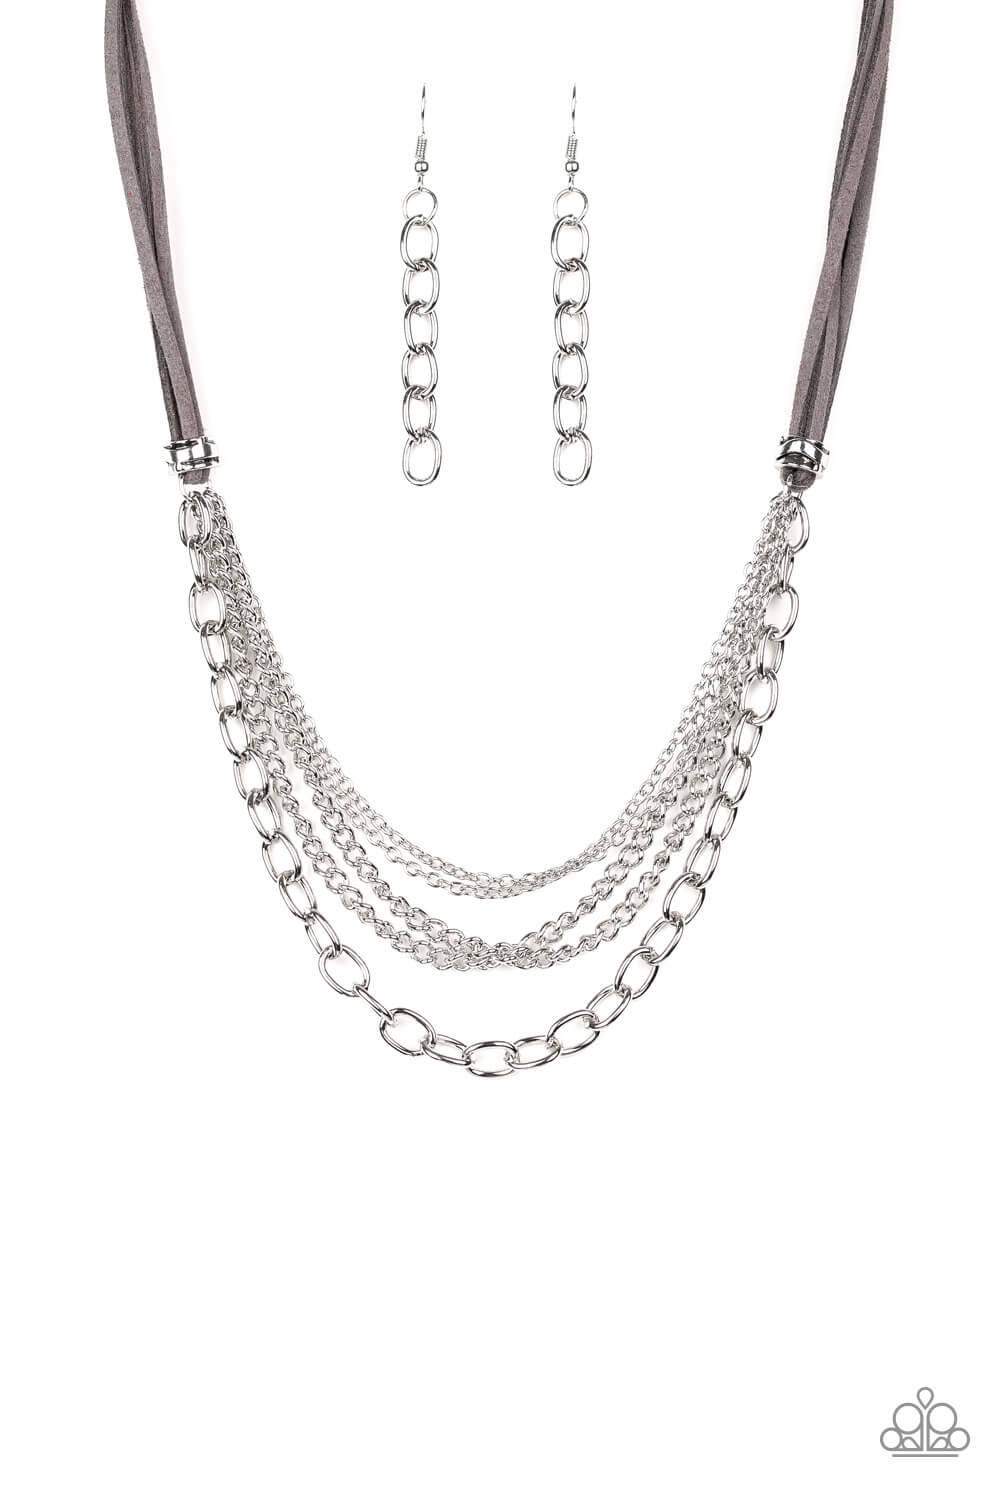 Free Roamer - Silver Necklace Set - Princess Glam Shop